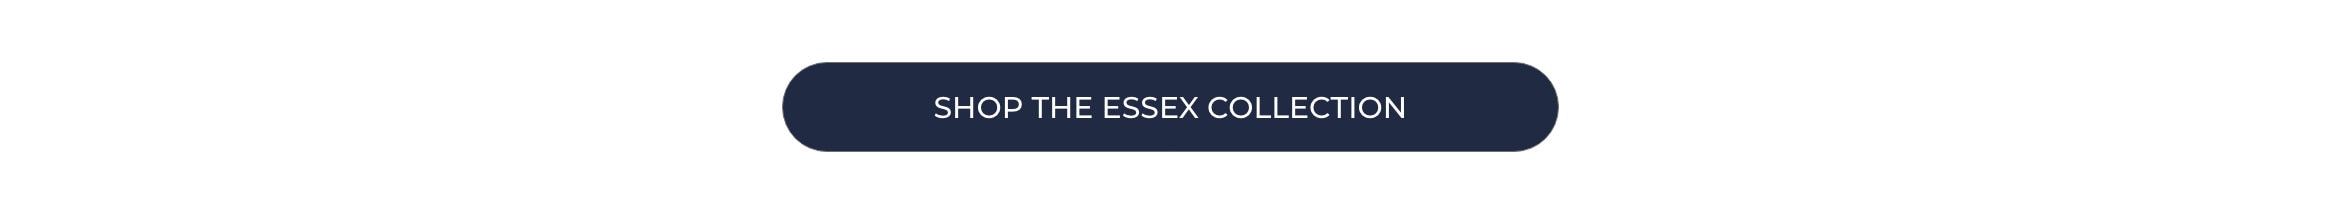 Shop Essex Collection